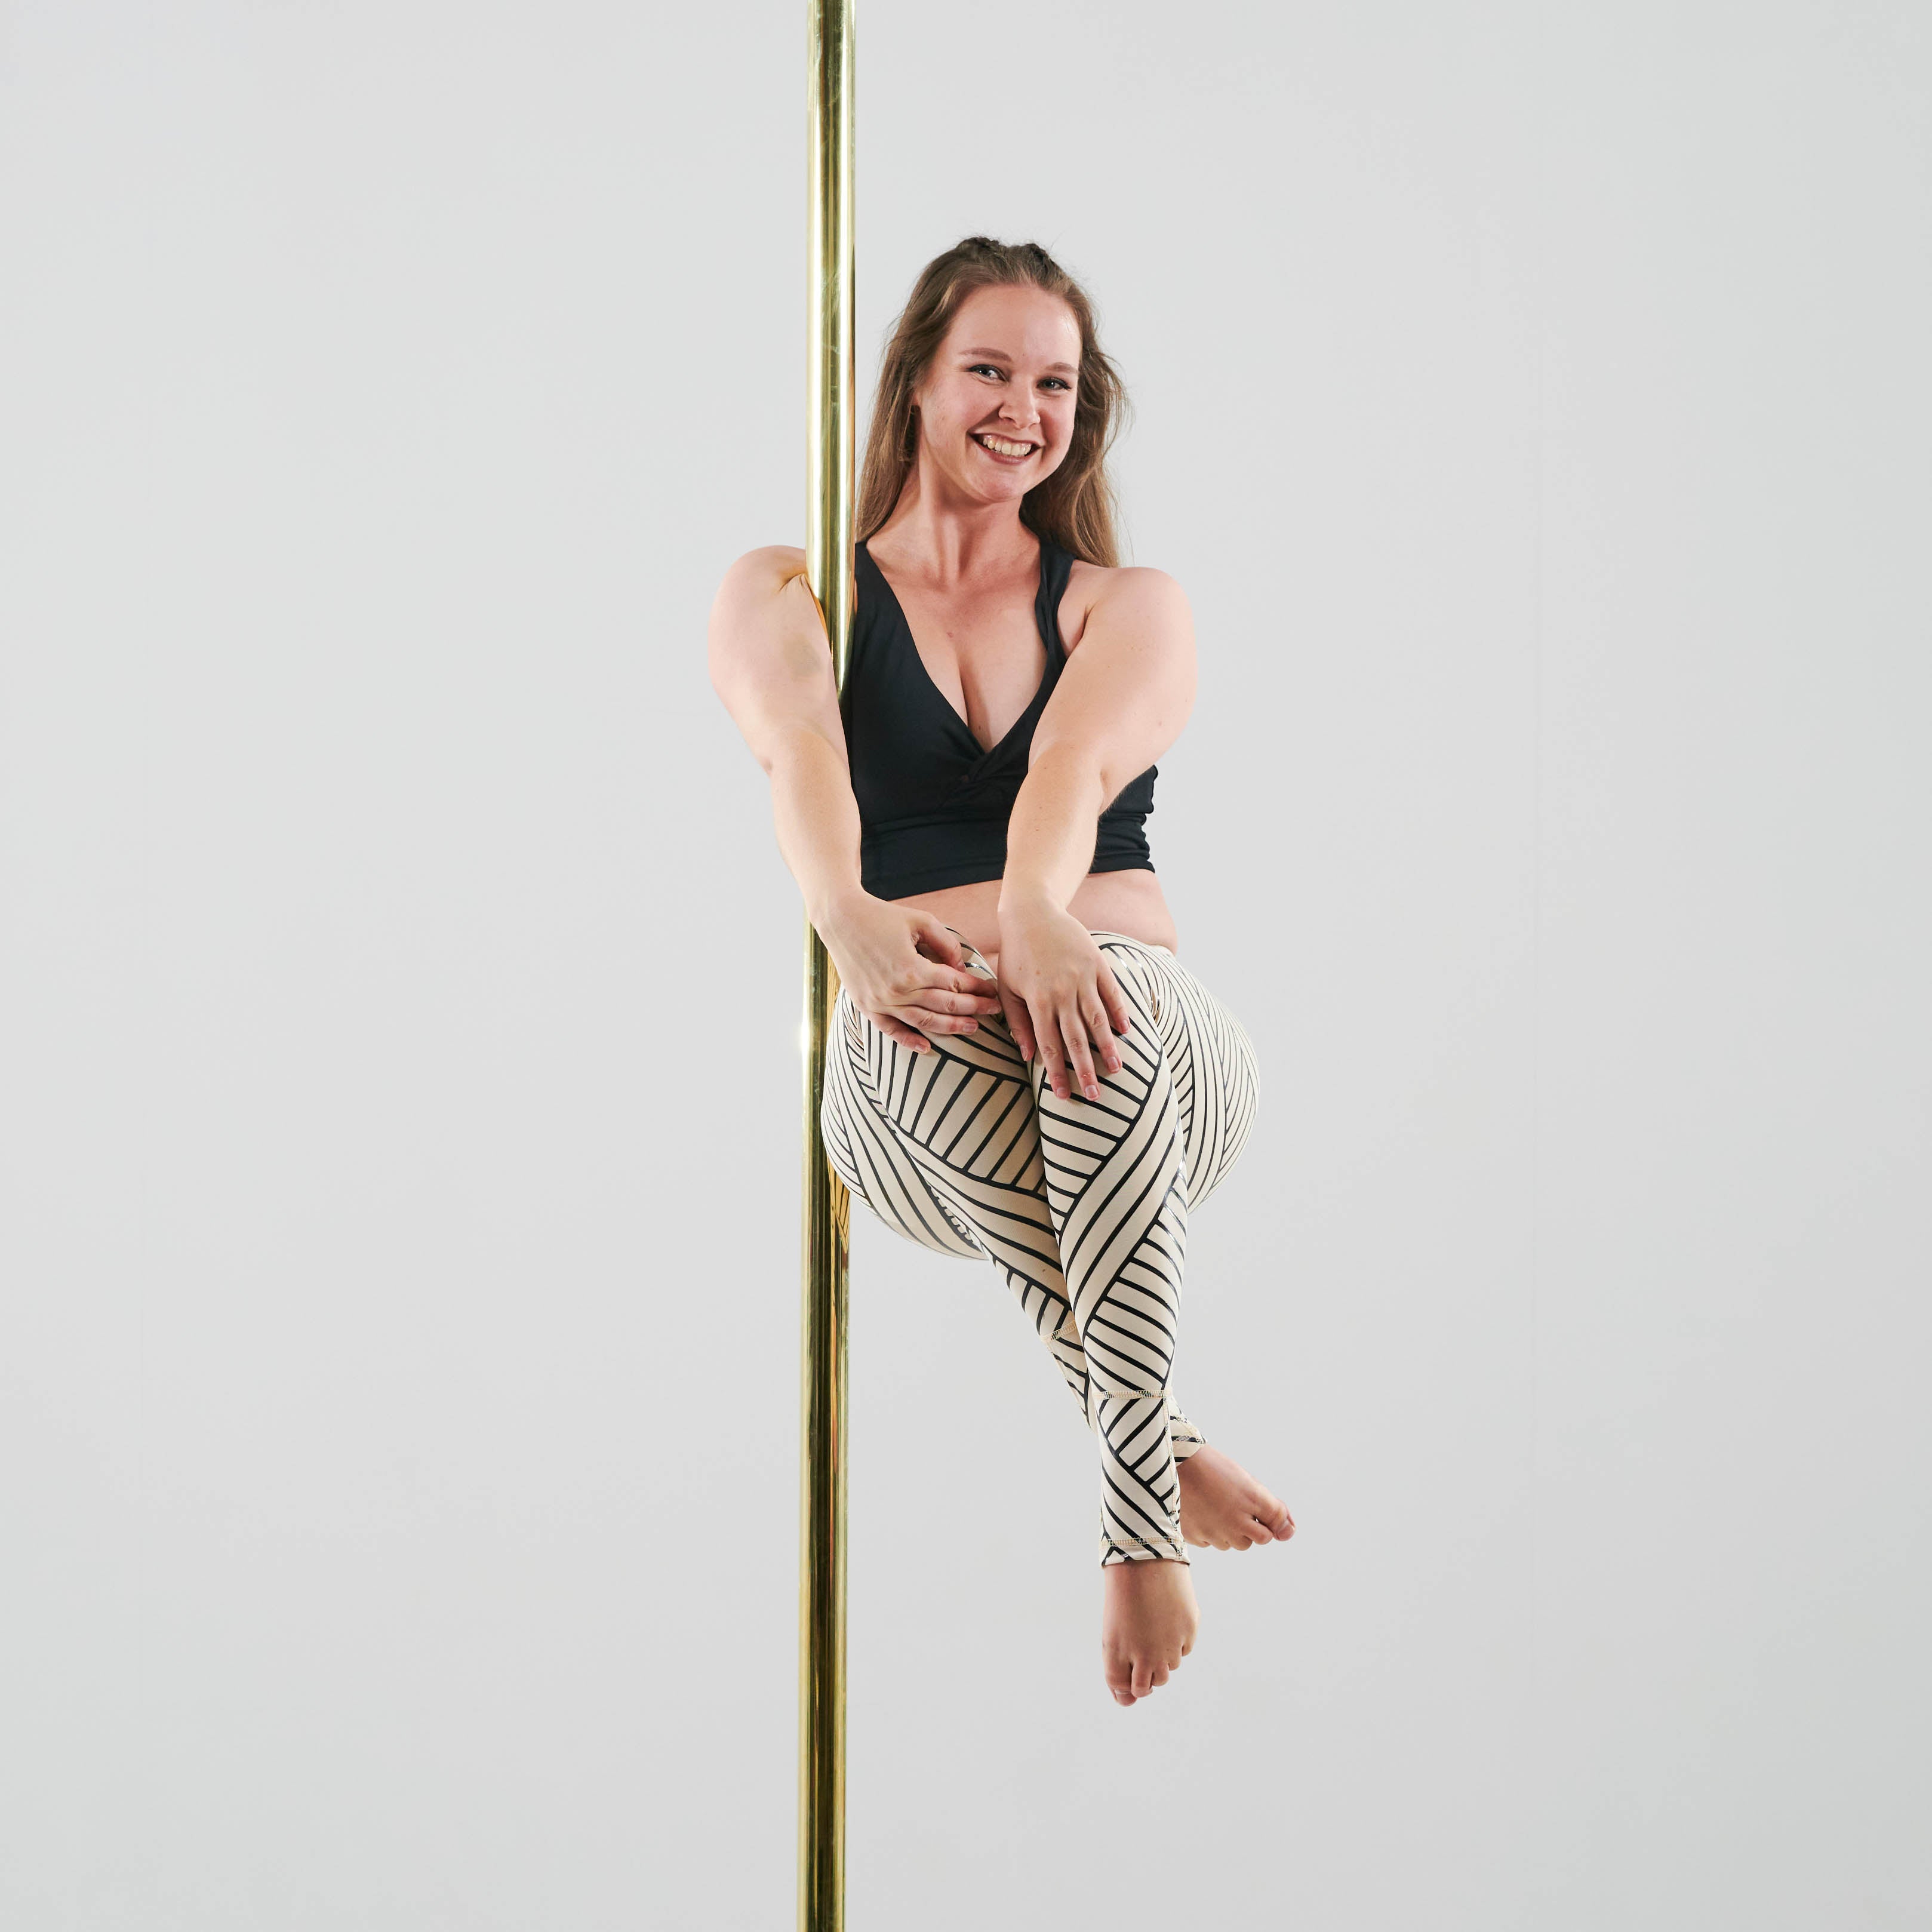 Pole Trick Tutorial: Ayesha with a Forearm Grip - Super Fly Honey Sticky  Pole Wear